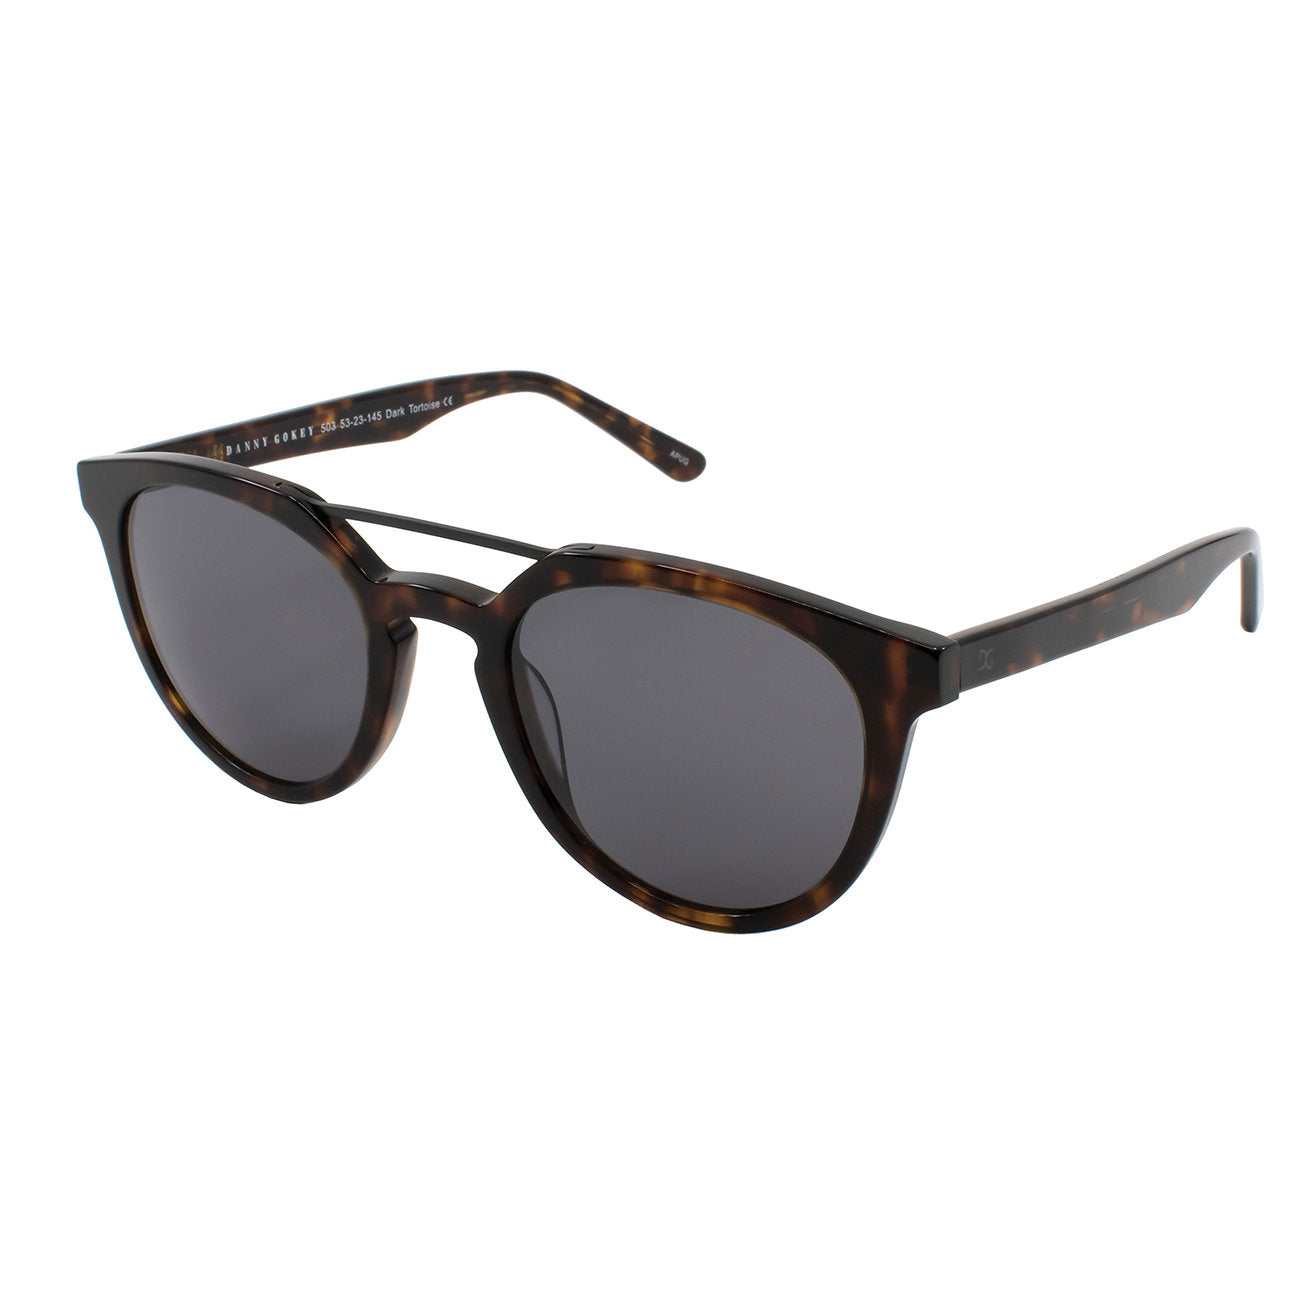 Danny Gokey sunglasses model 503 dark tortoise